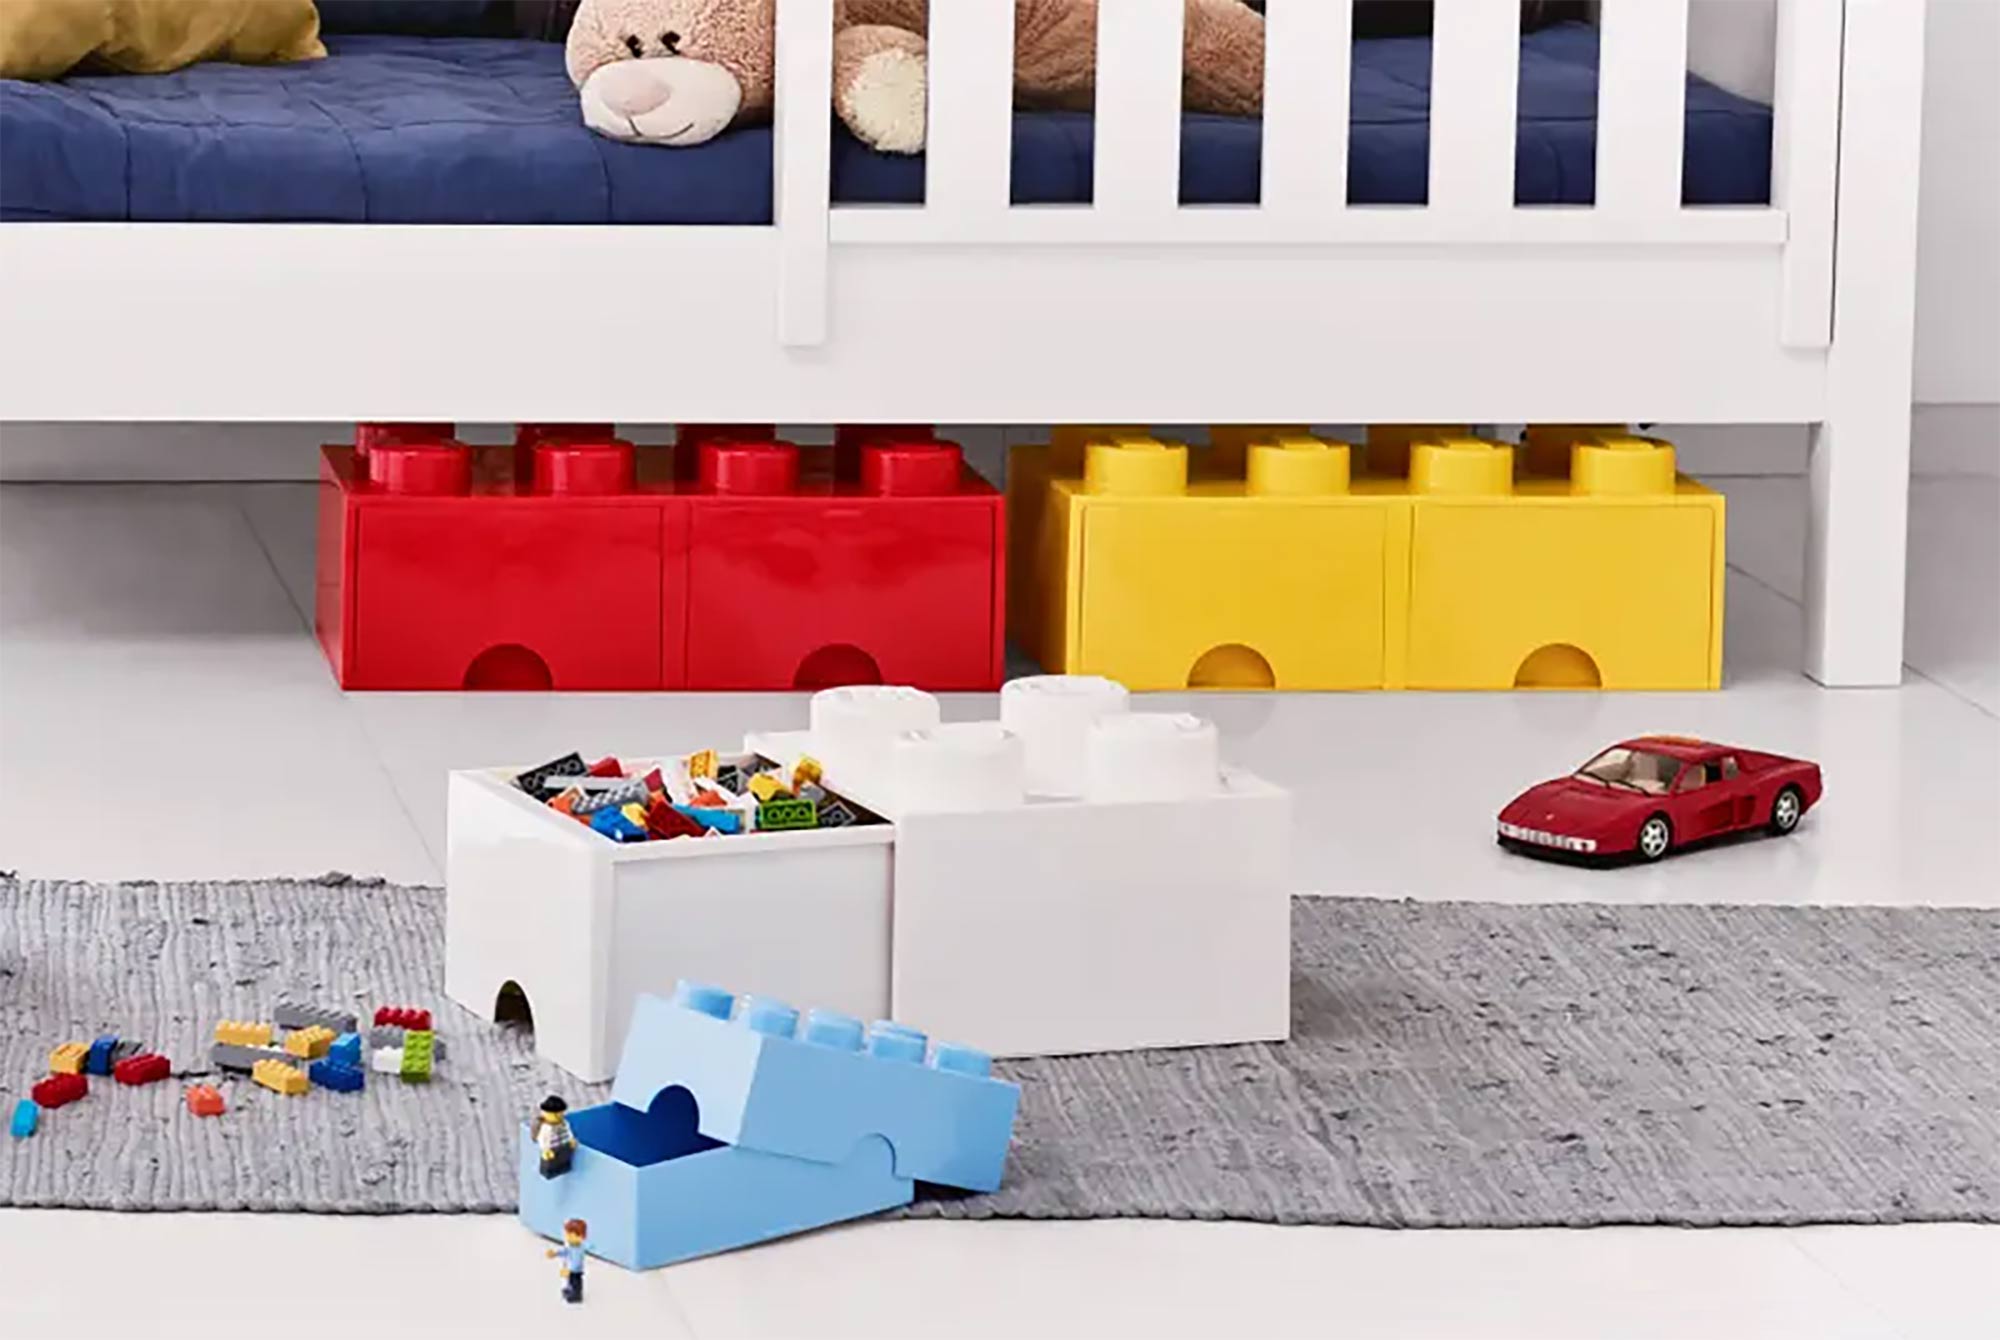 Lego Bricks and Storage